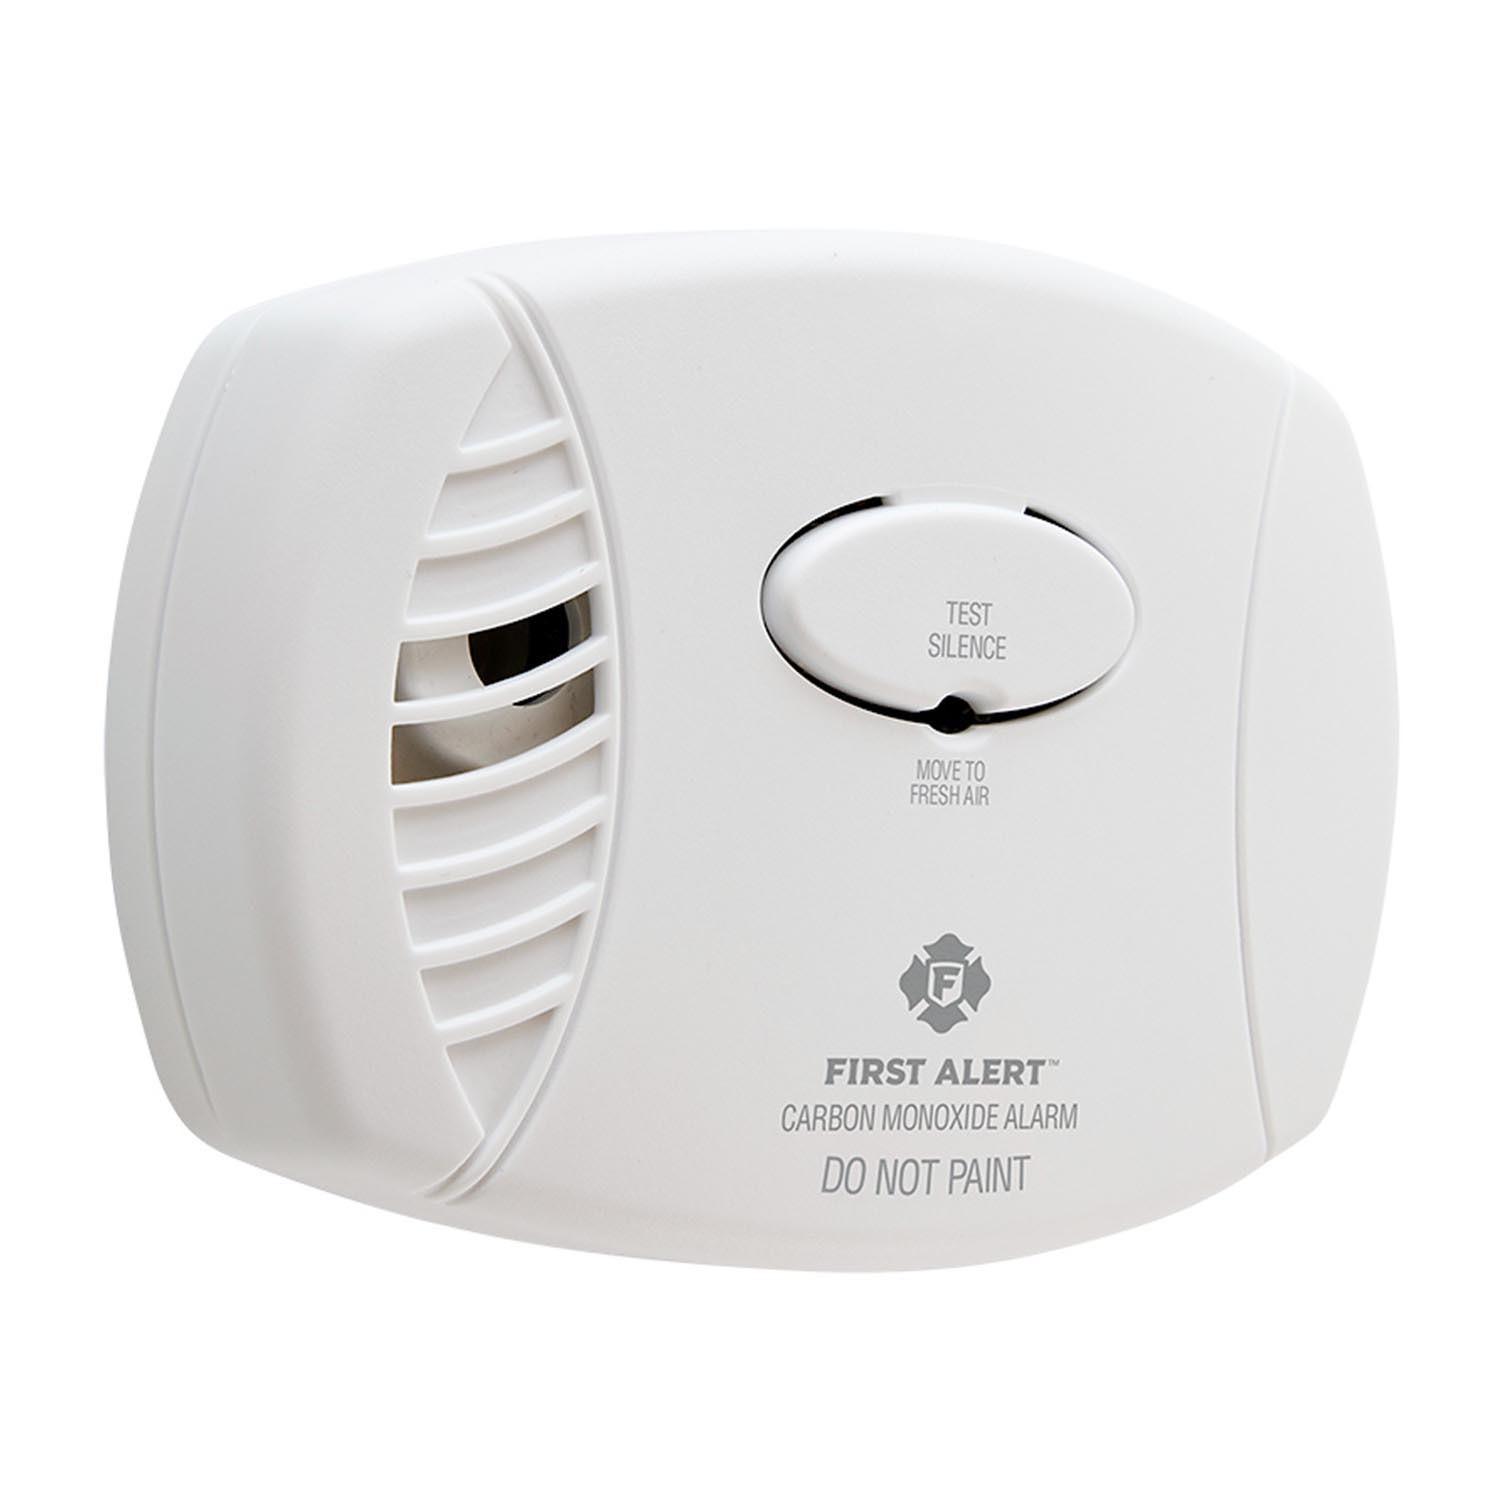 Carbon Monoxide Detector Saves Lives